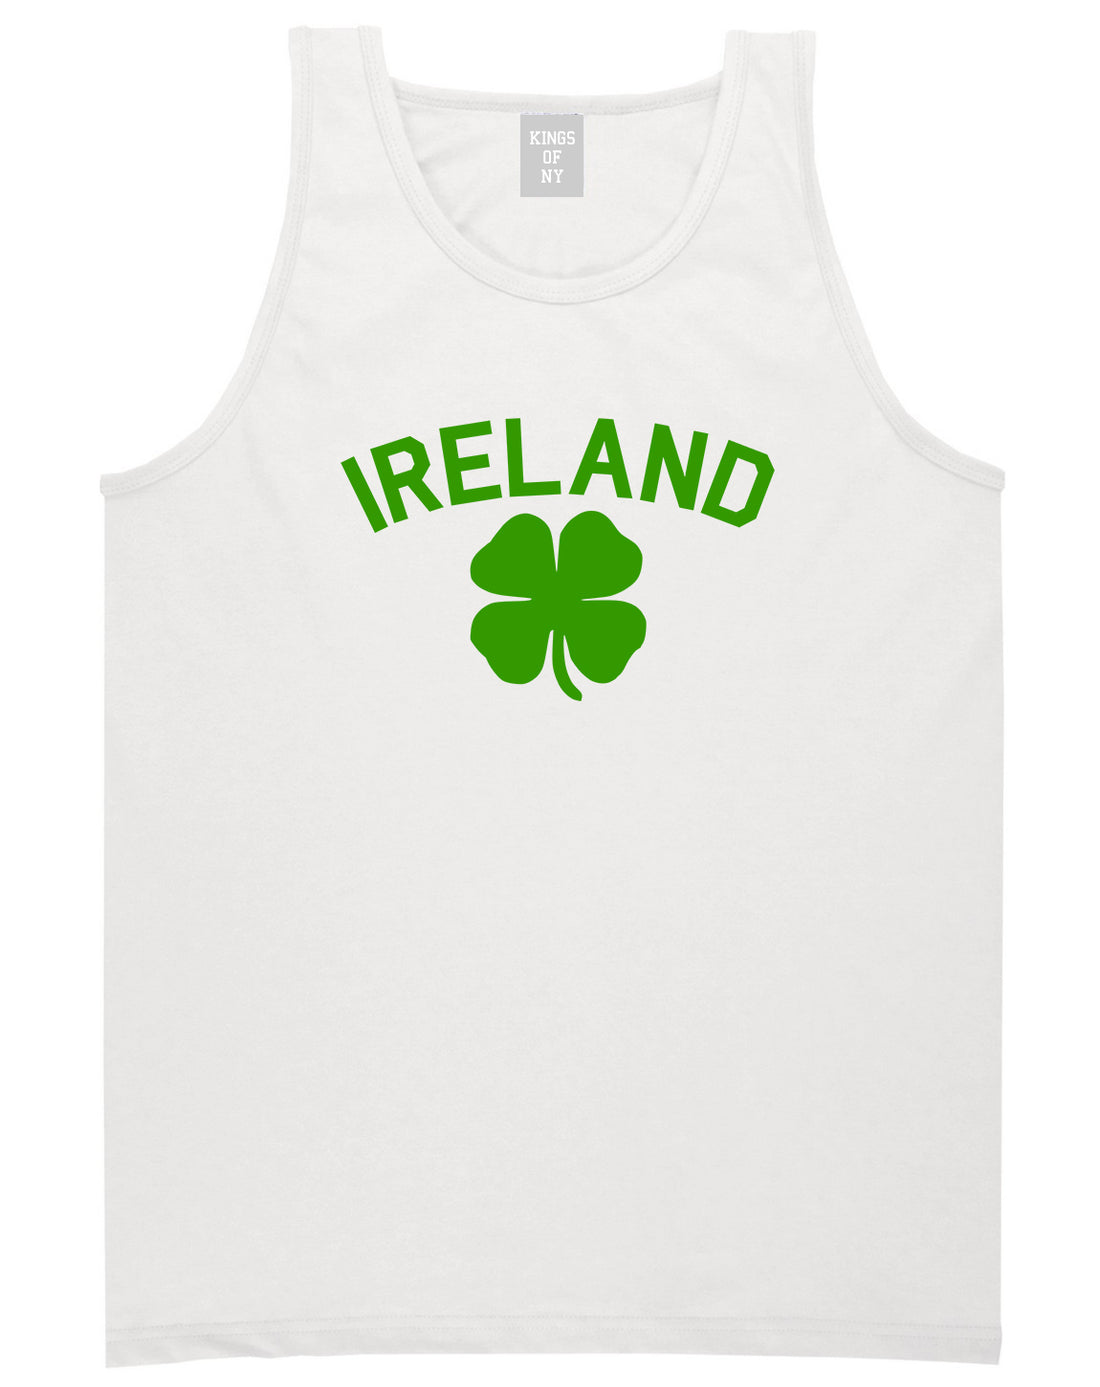 Ireland Shamrock St Paddys Day Mens Tank Top Shirt White